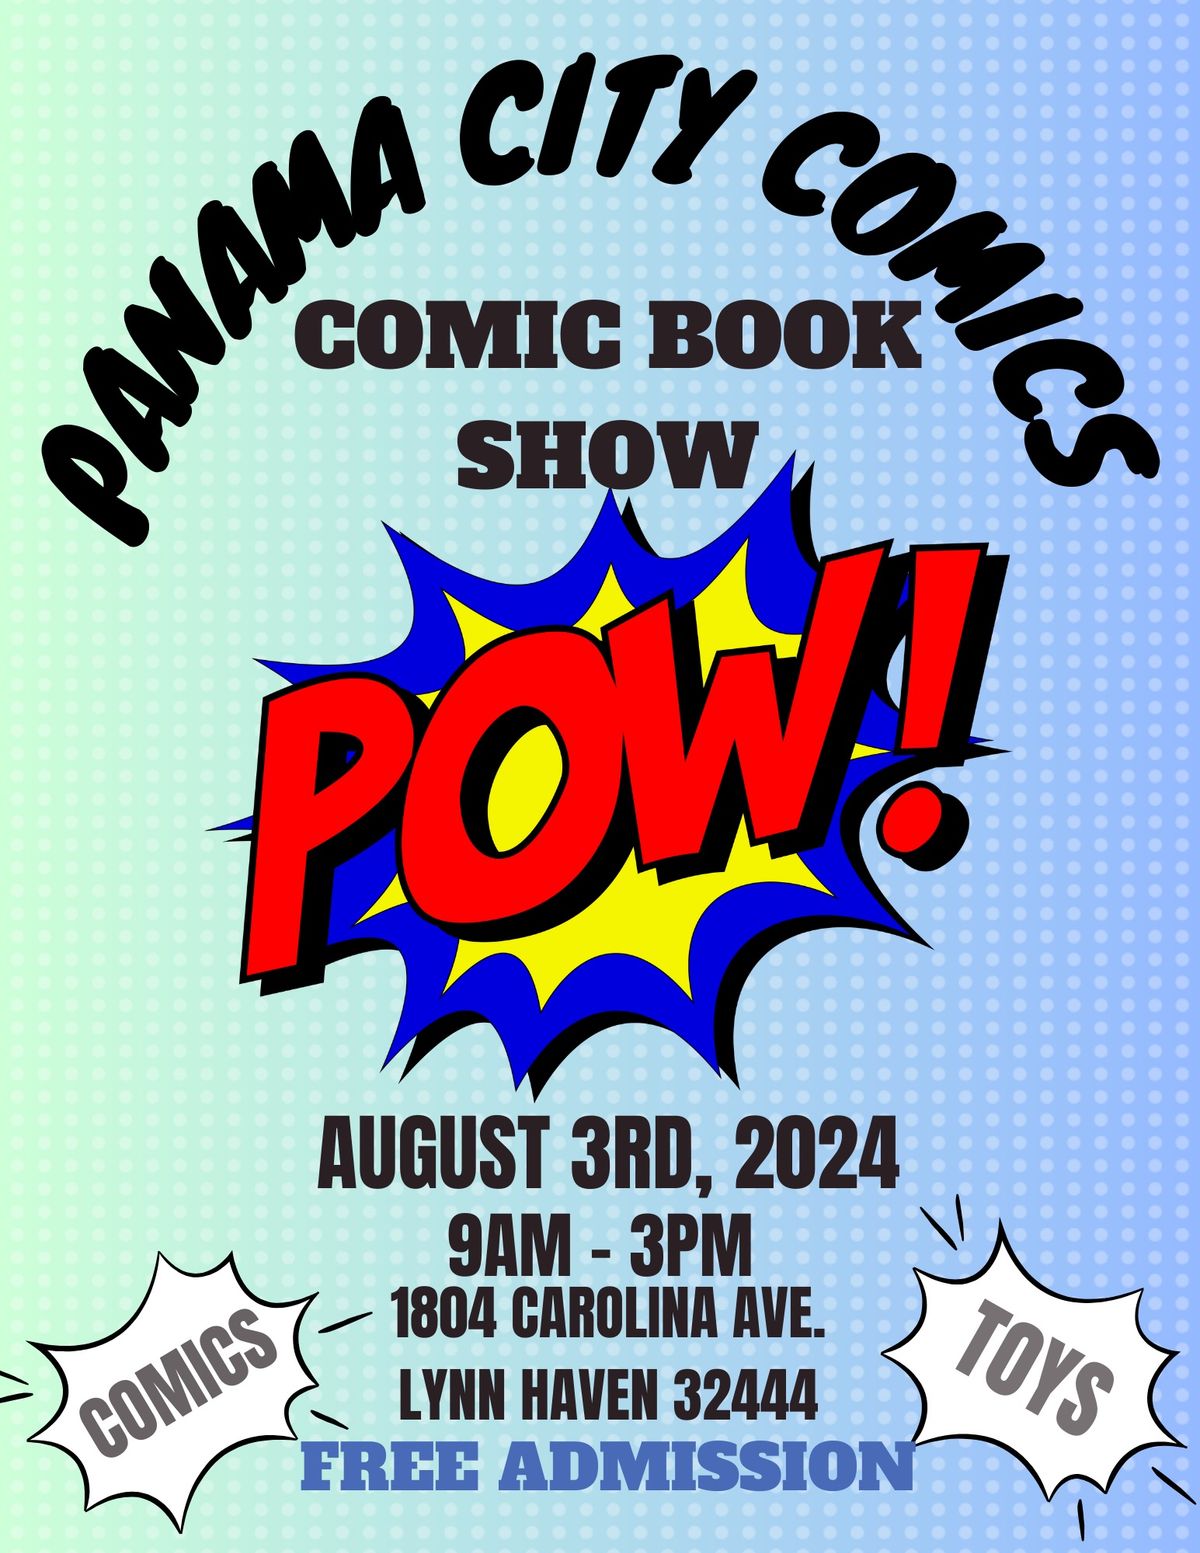 Panama City Comics Comic Book Show